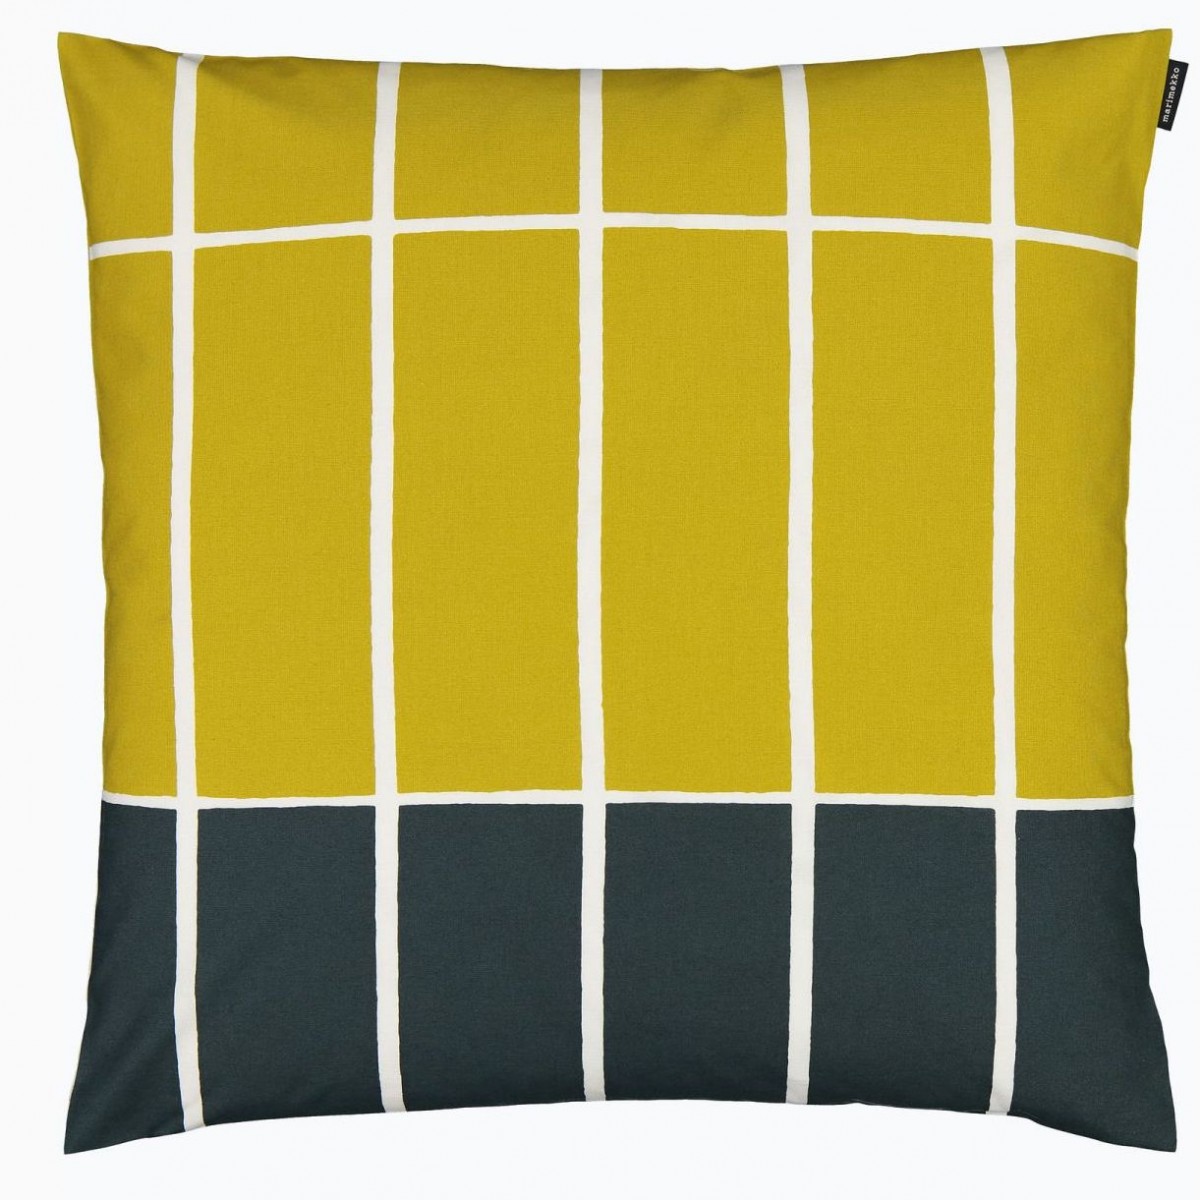 50x50 cm - Tiiliskivi 686 - Marimekko cushion cover